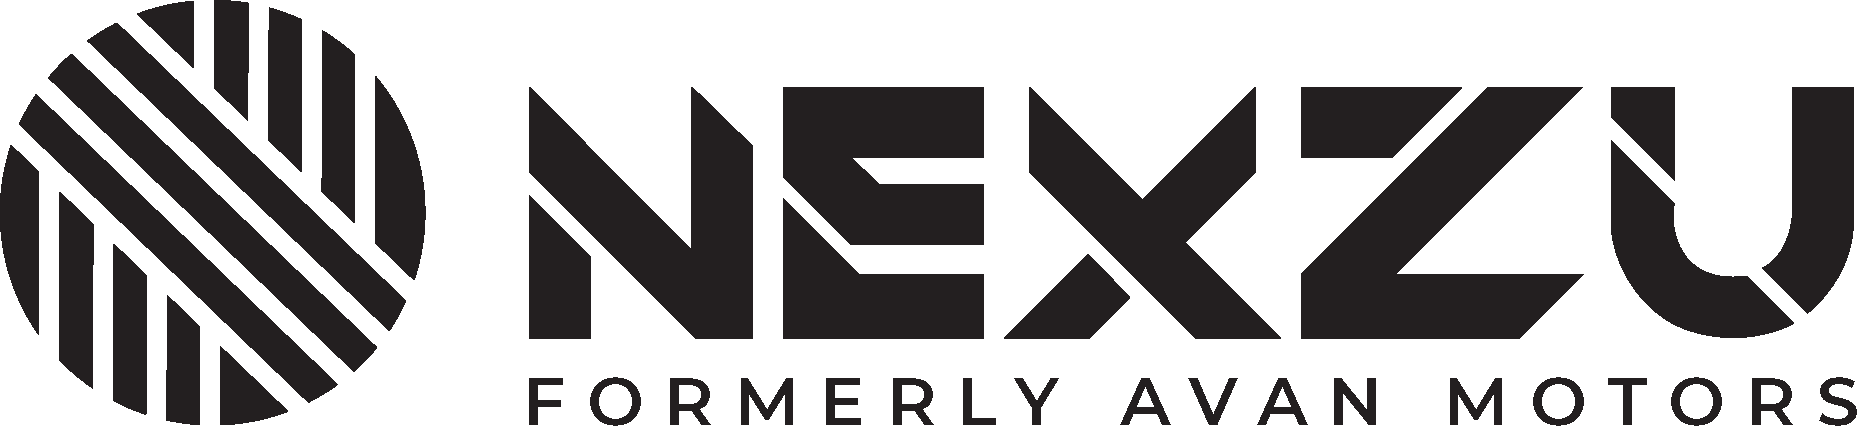 Nexzu Mobility Ltd